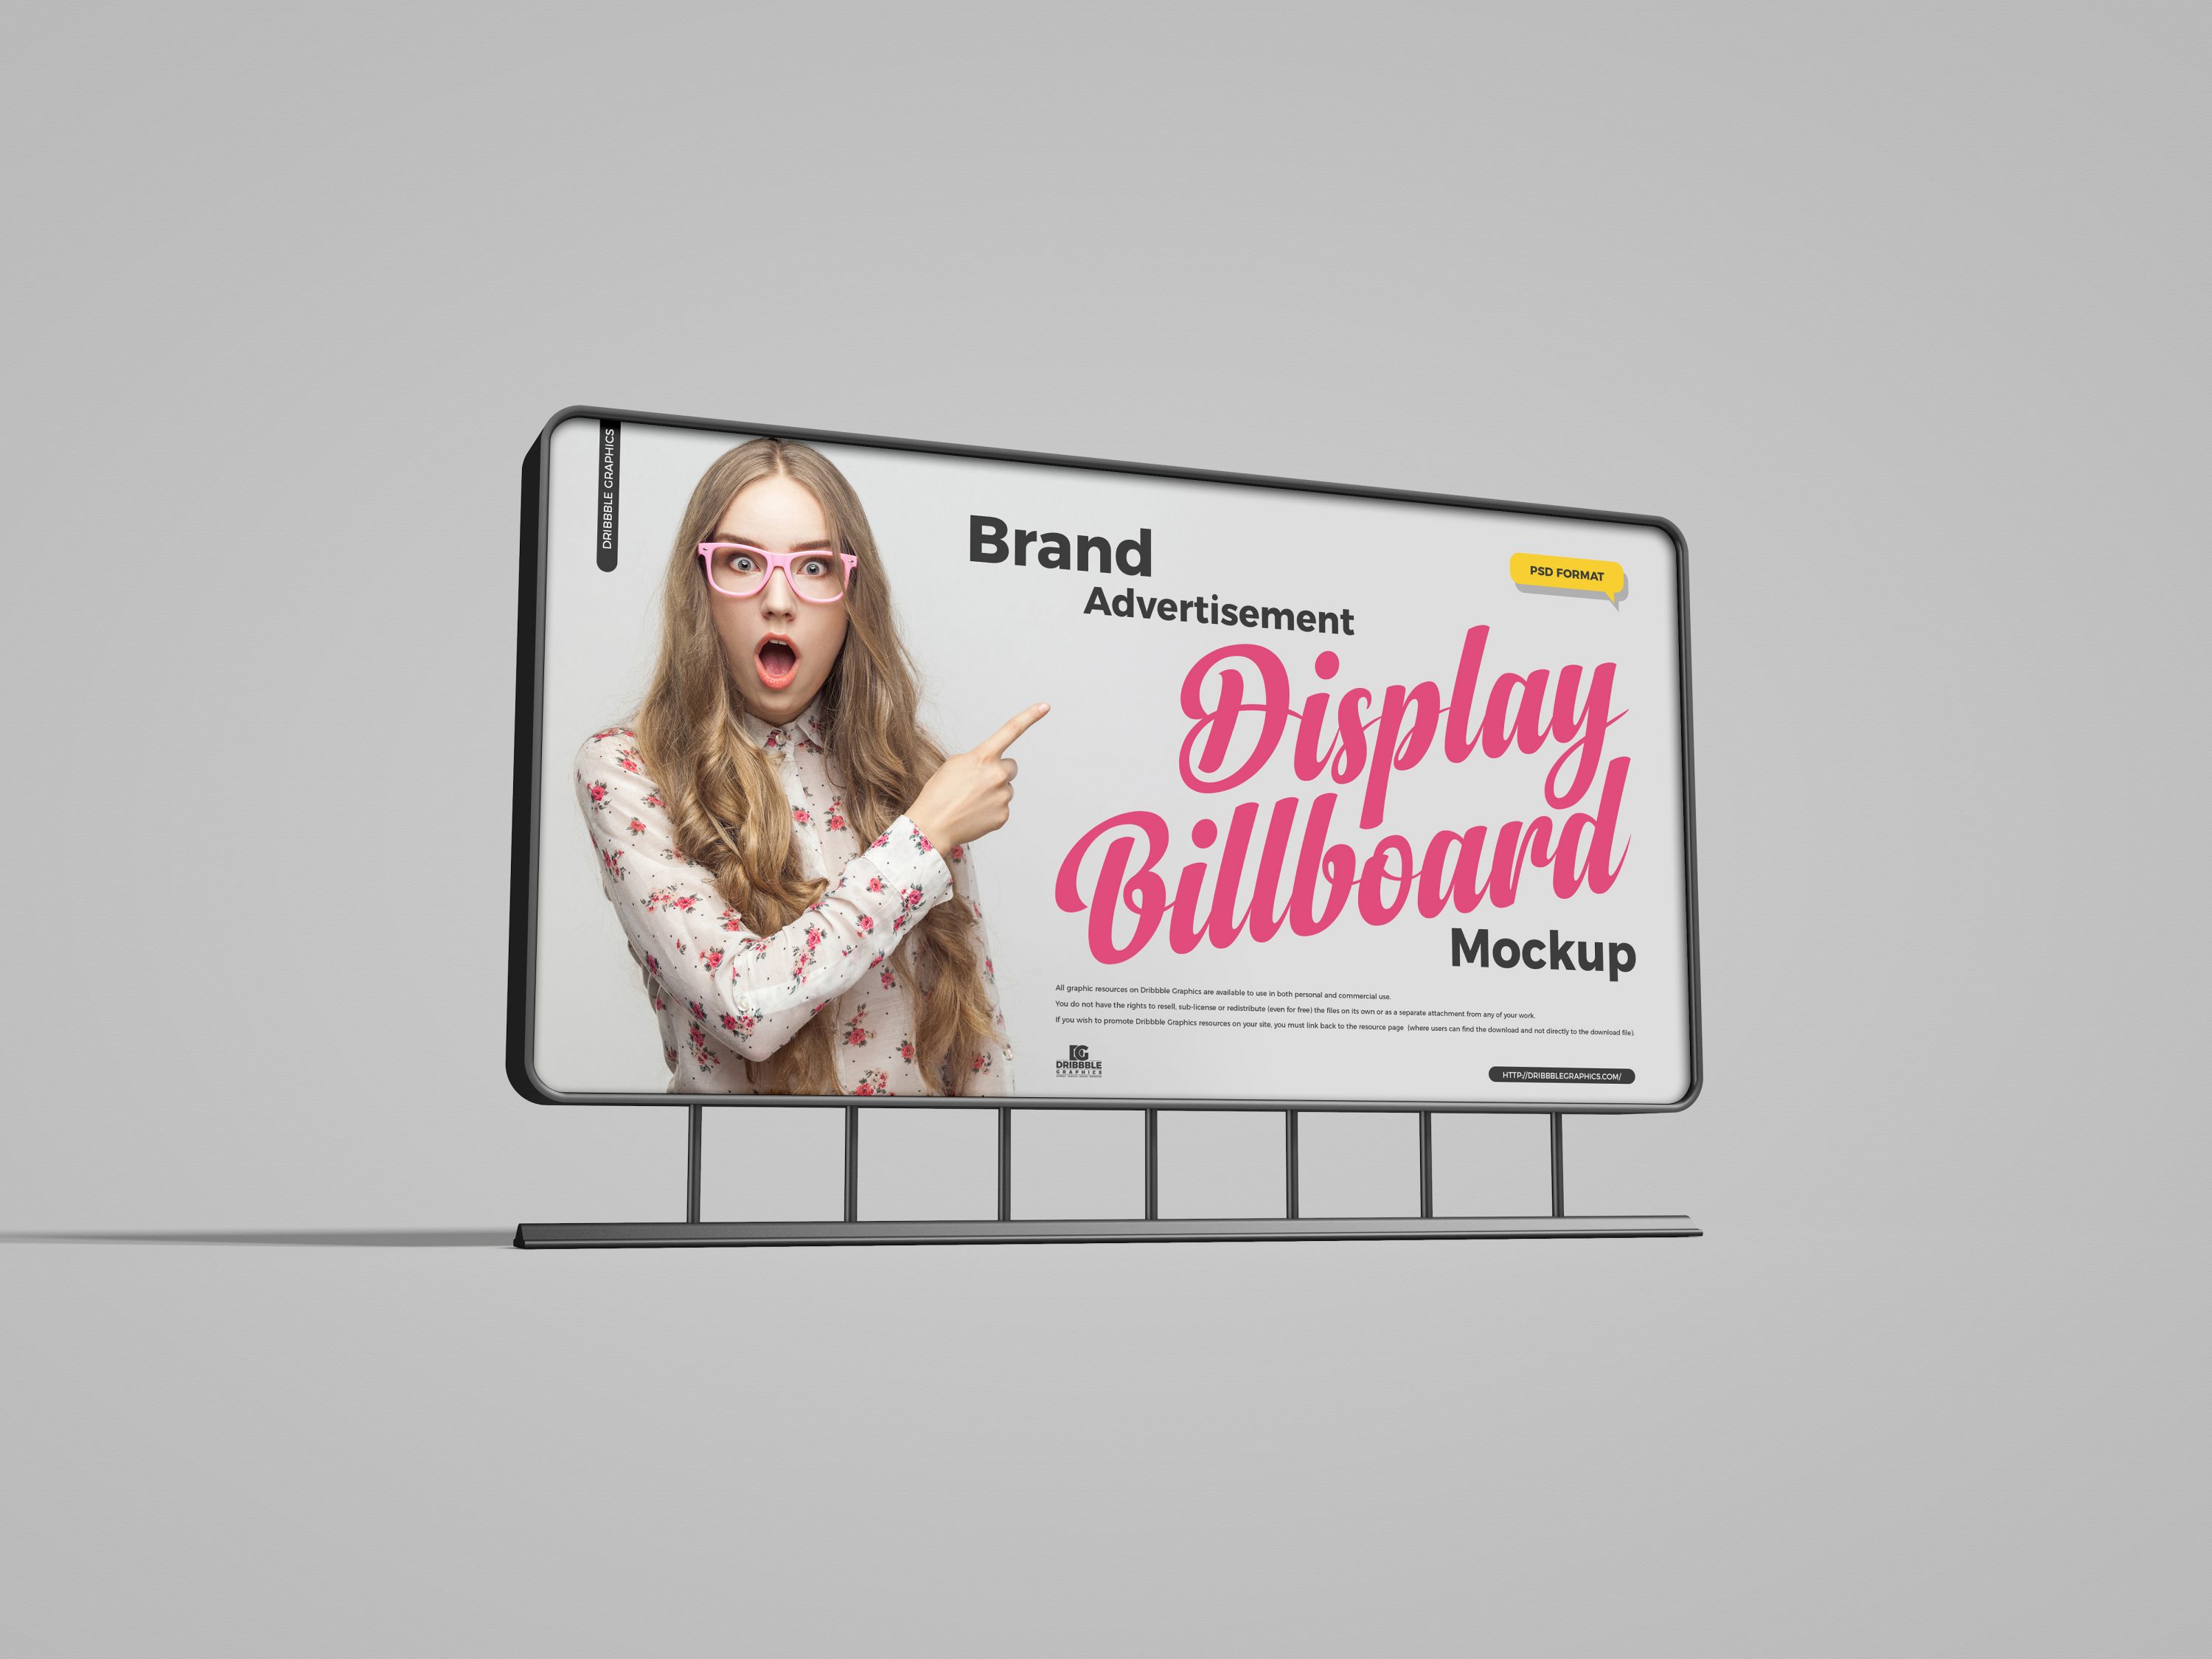 Free Brand Advertisement Display Billboard Mockup